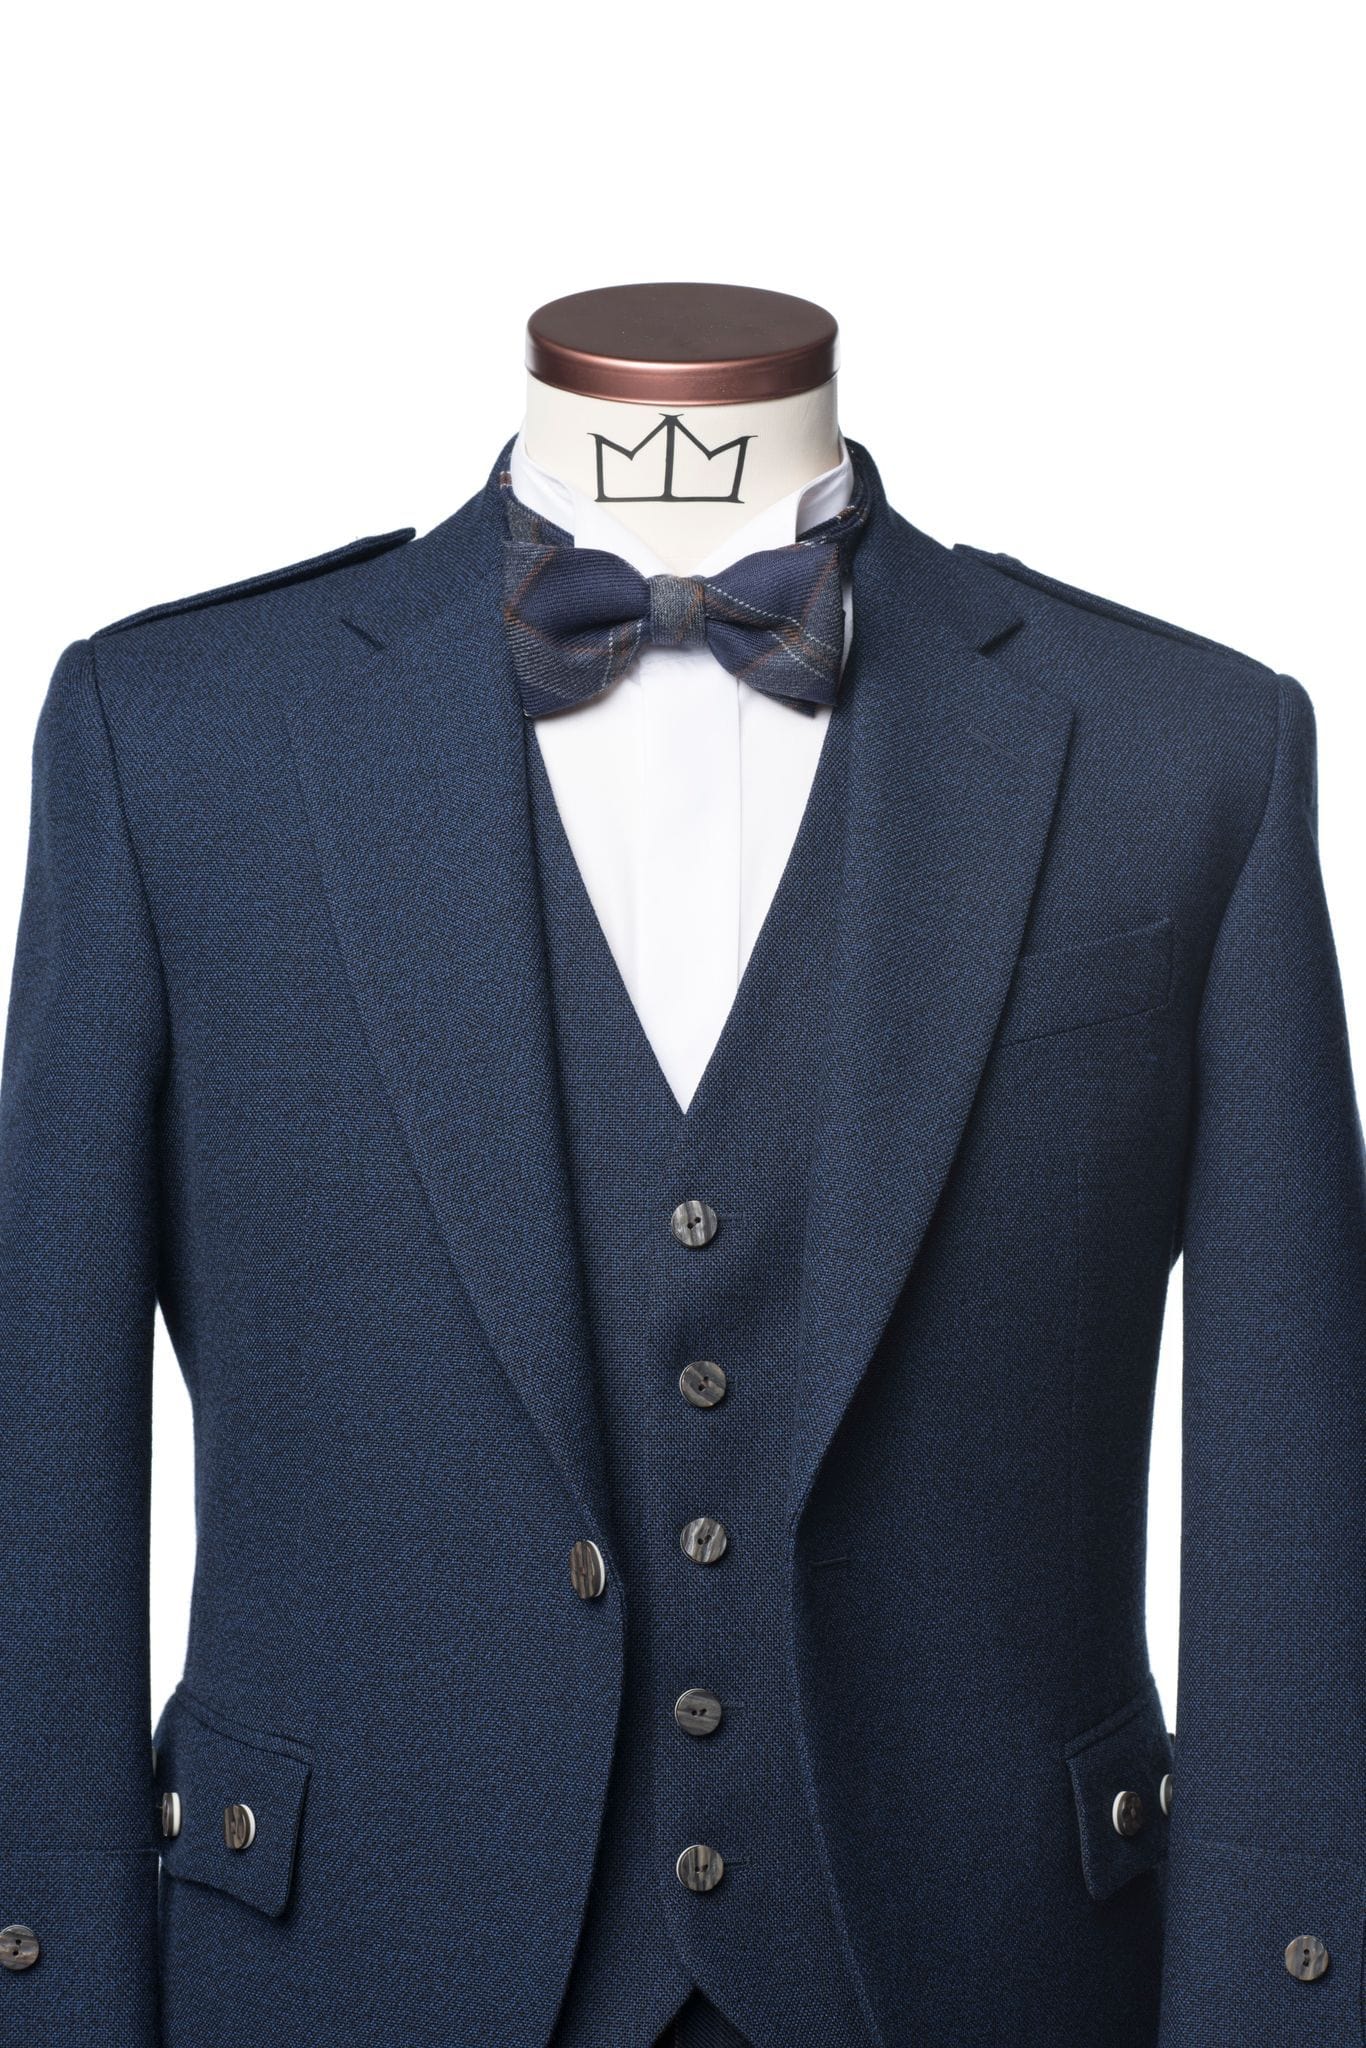 Arran Navy Tweed Kilt Outfit - MacGregor and MacDuff